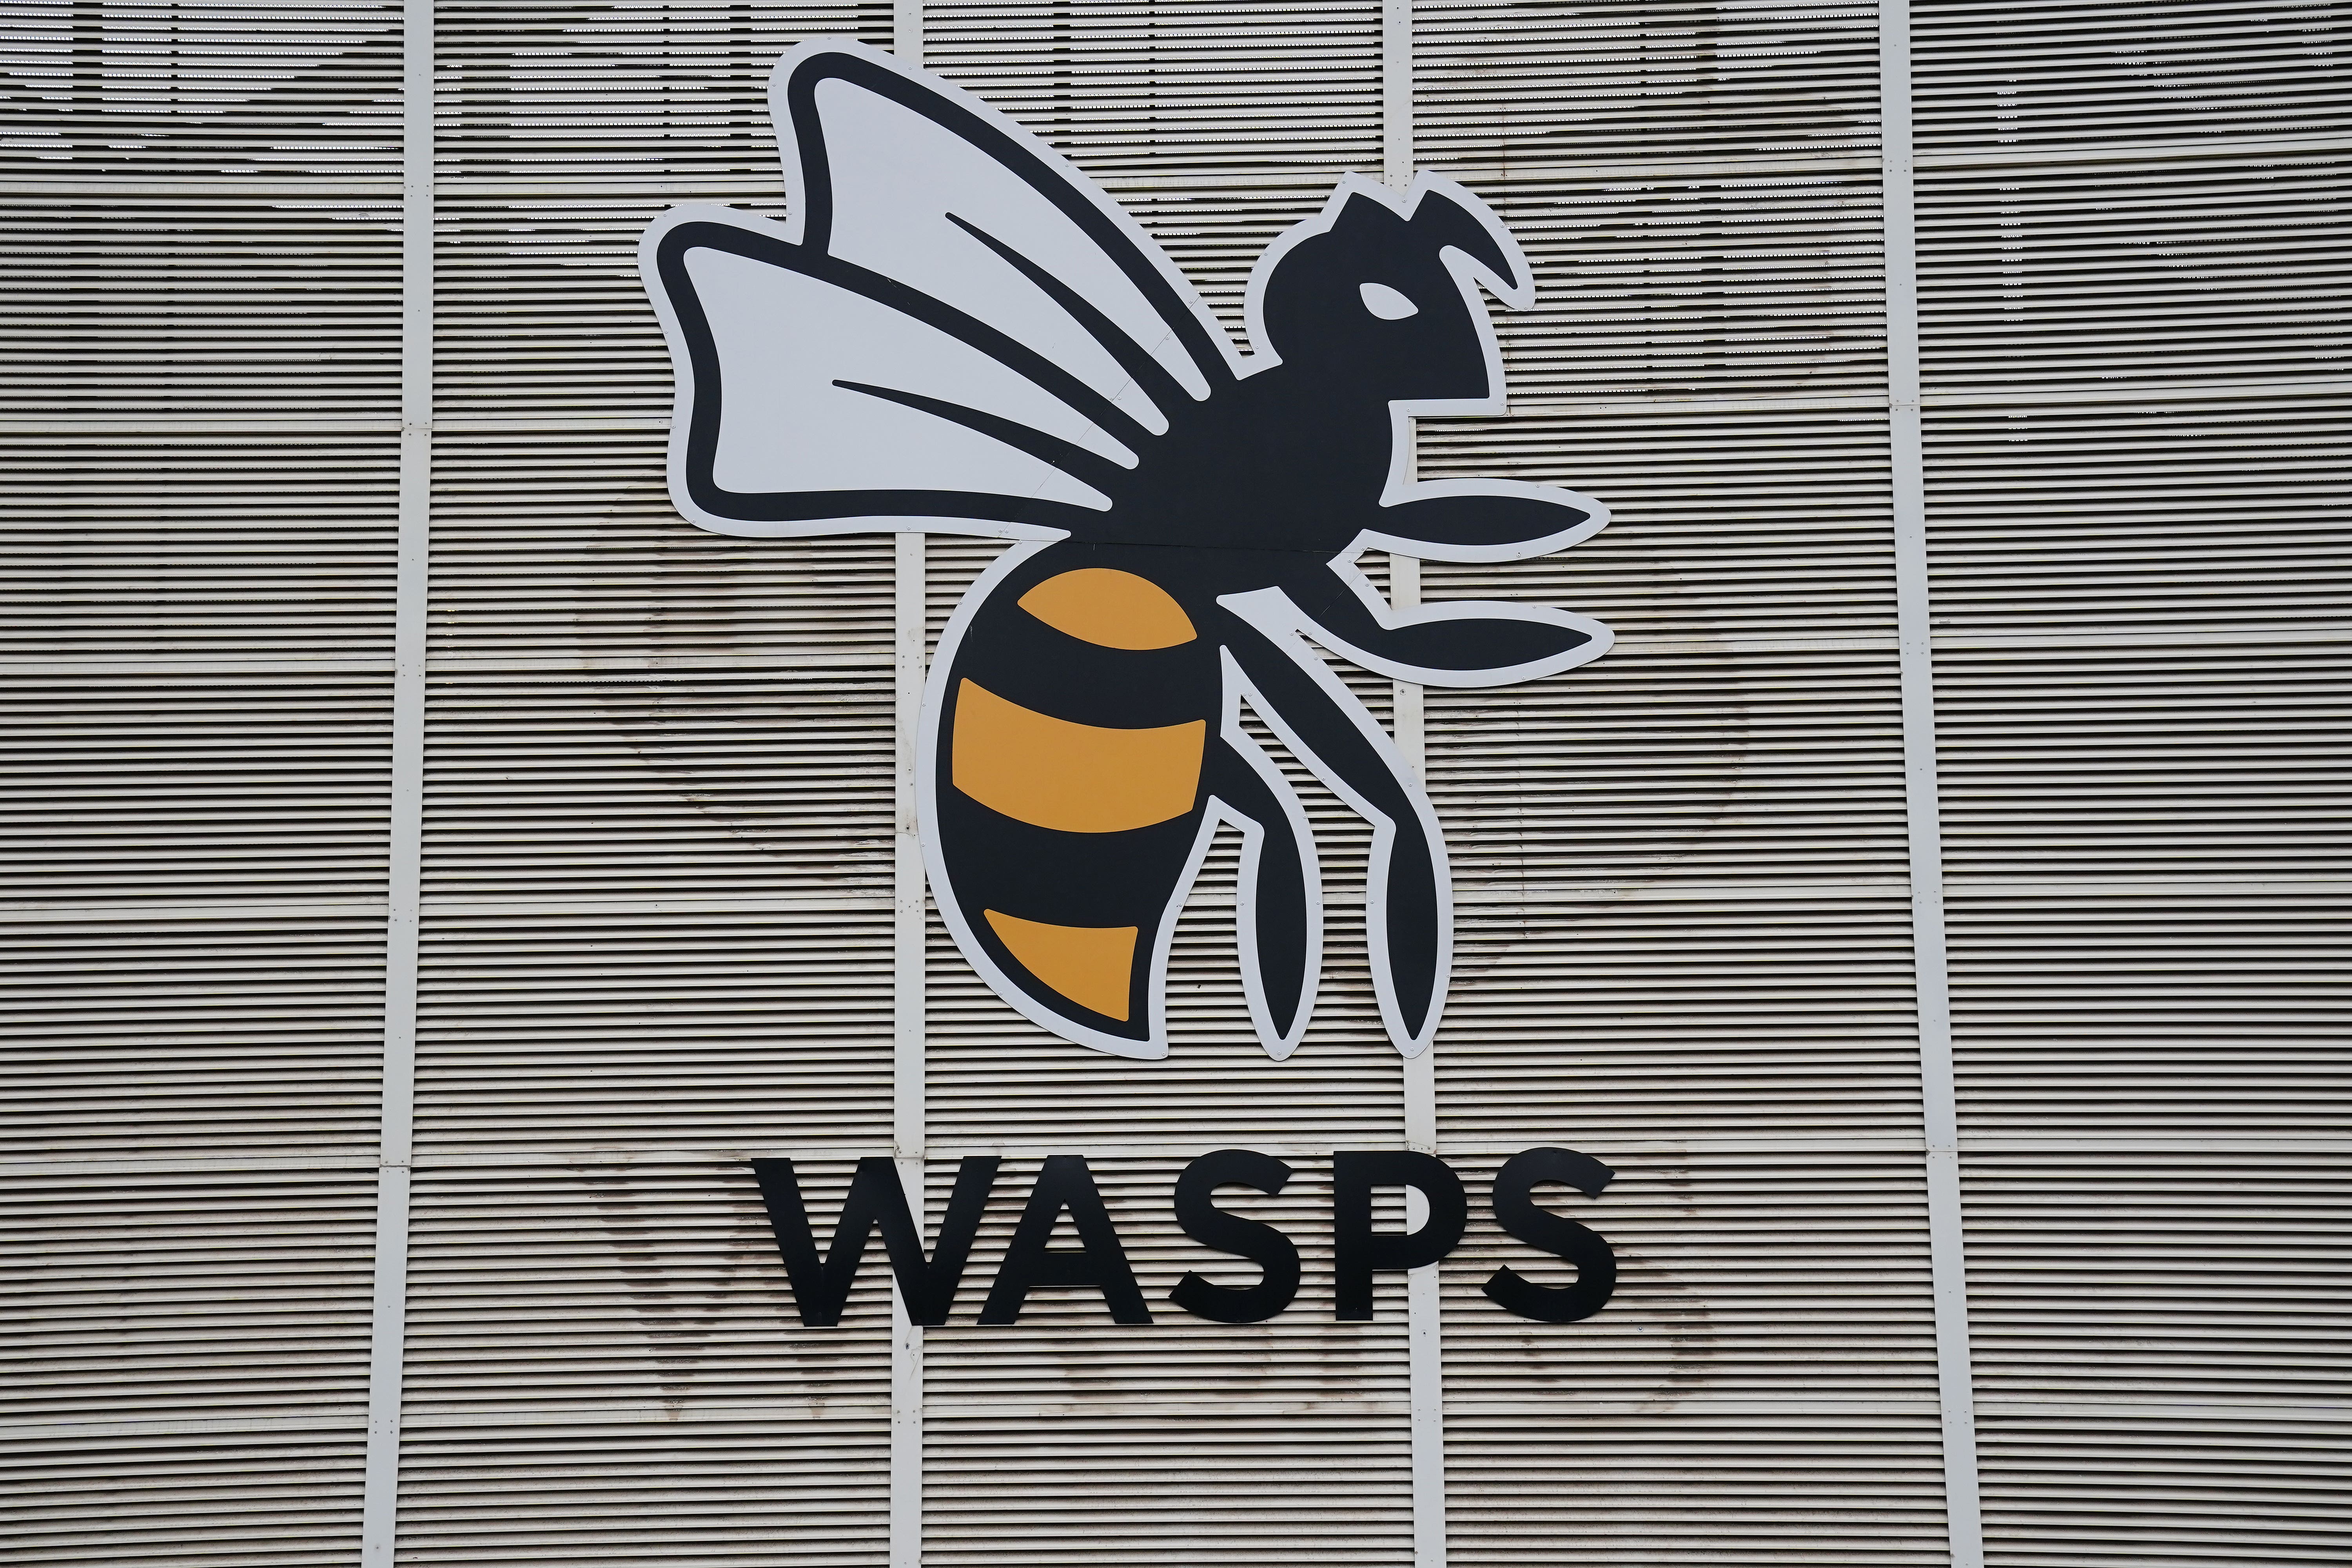 Wasps will play in the Championship next season (David Davies/PA)